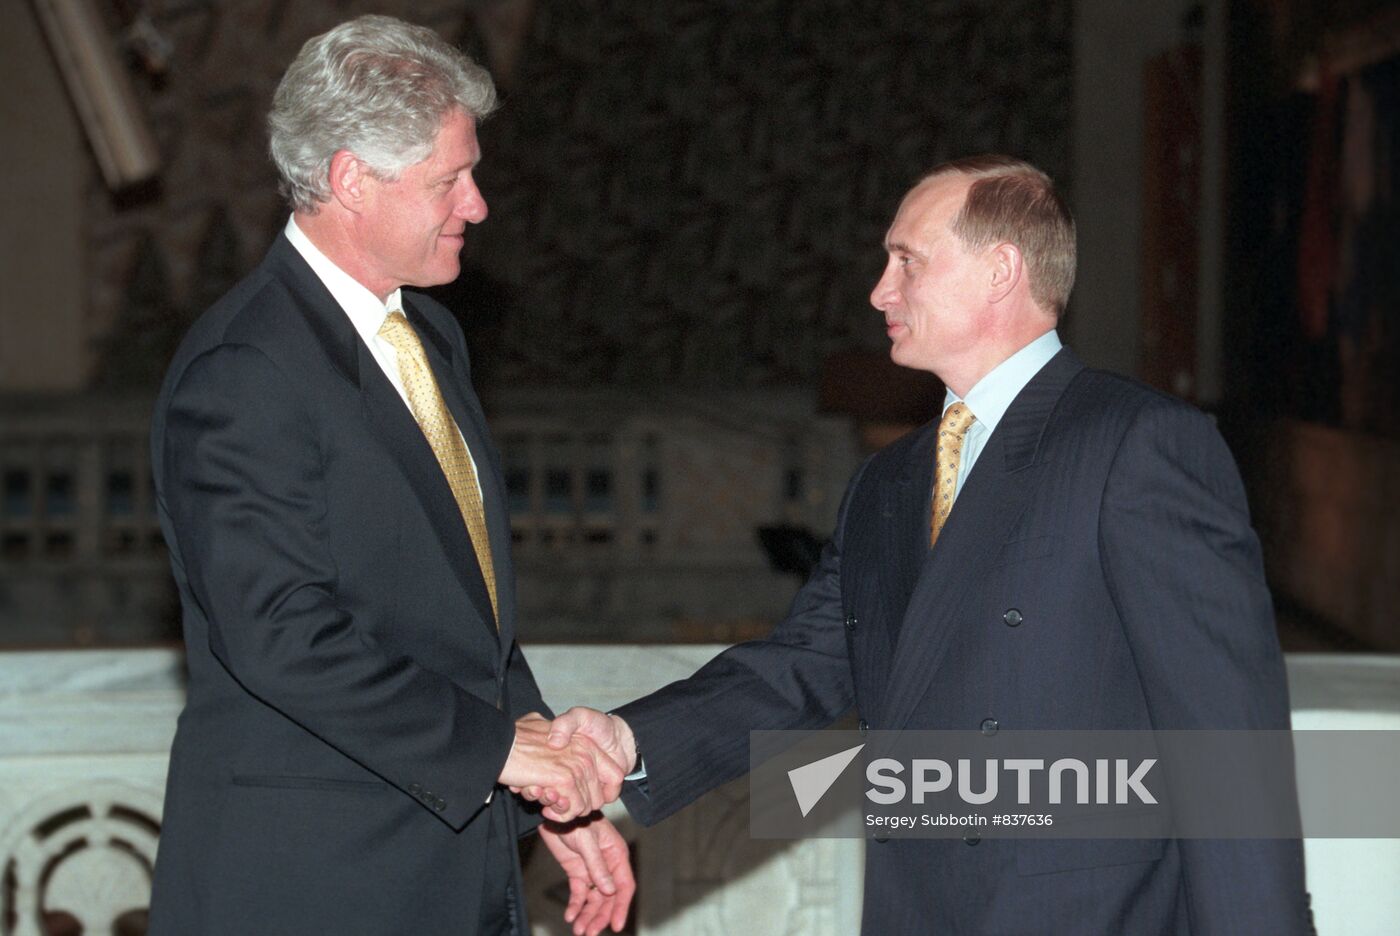 Vladimir Putin and Bill Clinton